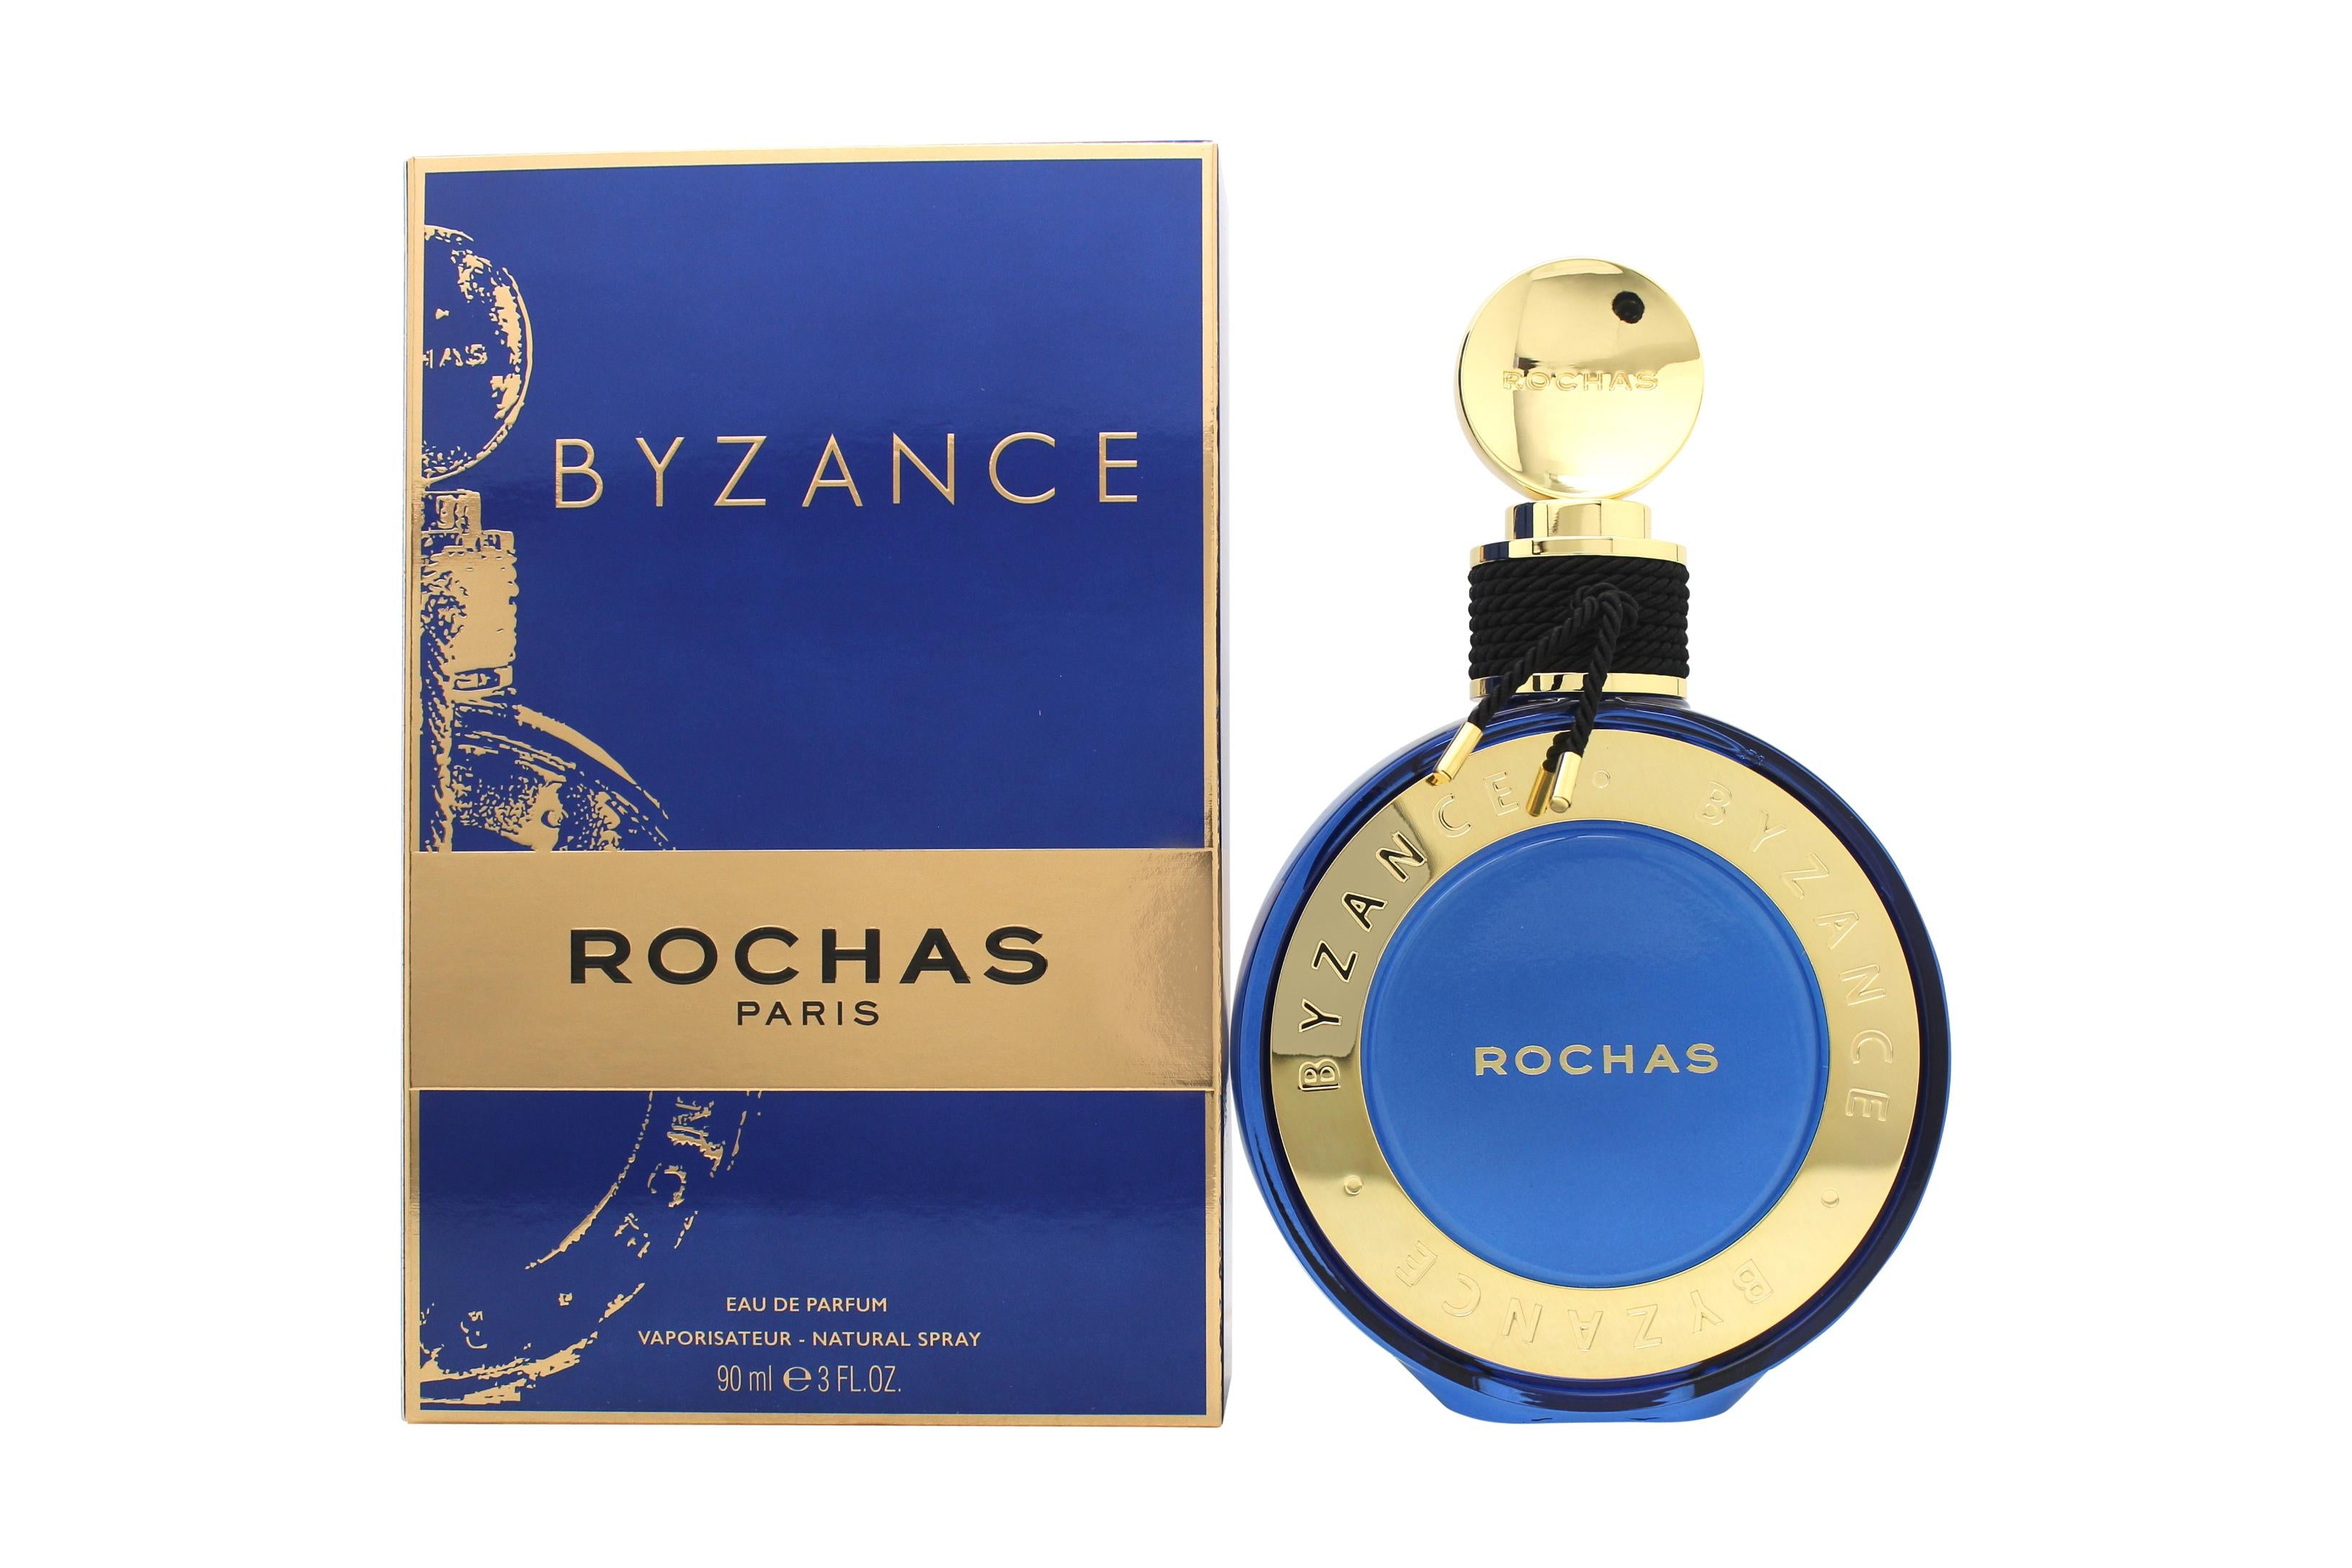 View Rochas Byzance 2019 Eau de Parfum 90ml Spray information